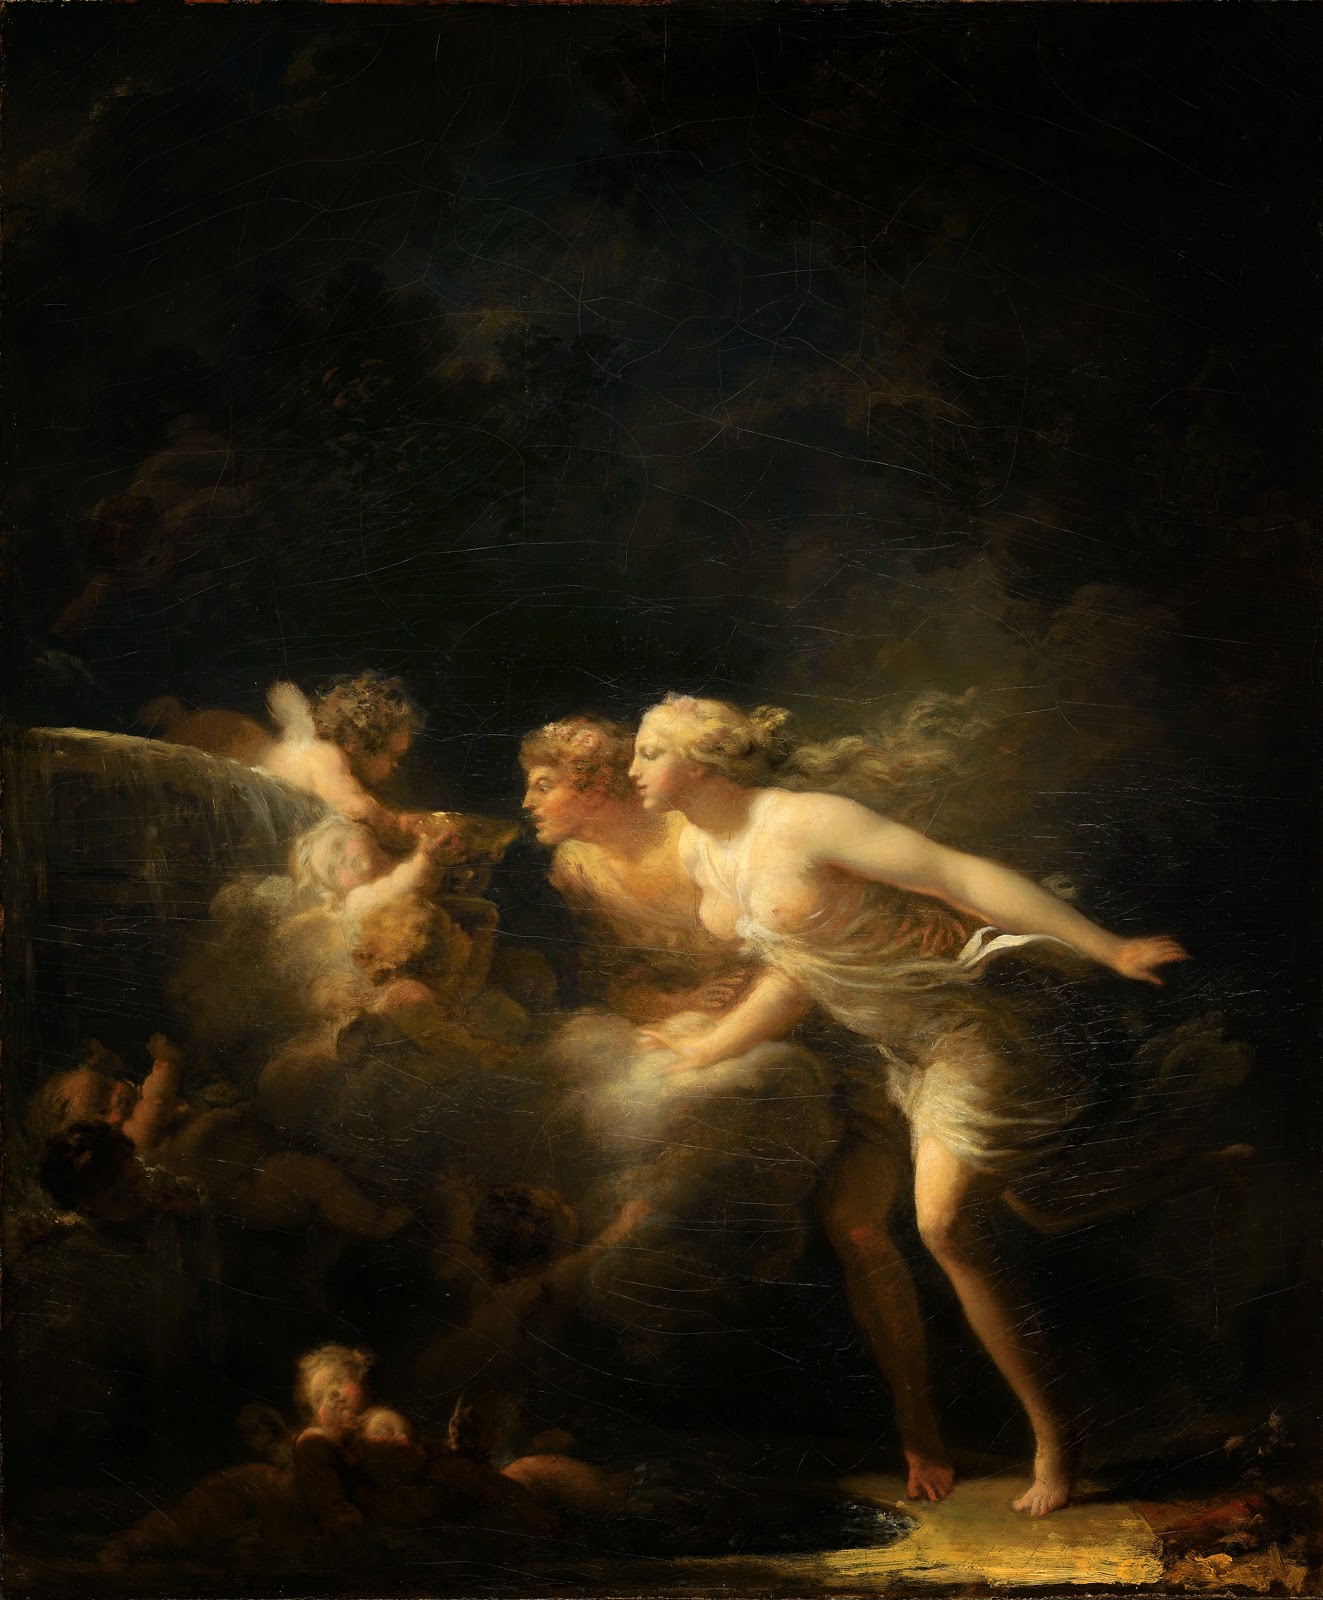 Jean+Honore+Fragonard-1732-1806 (126).jpg